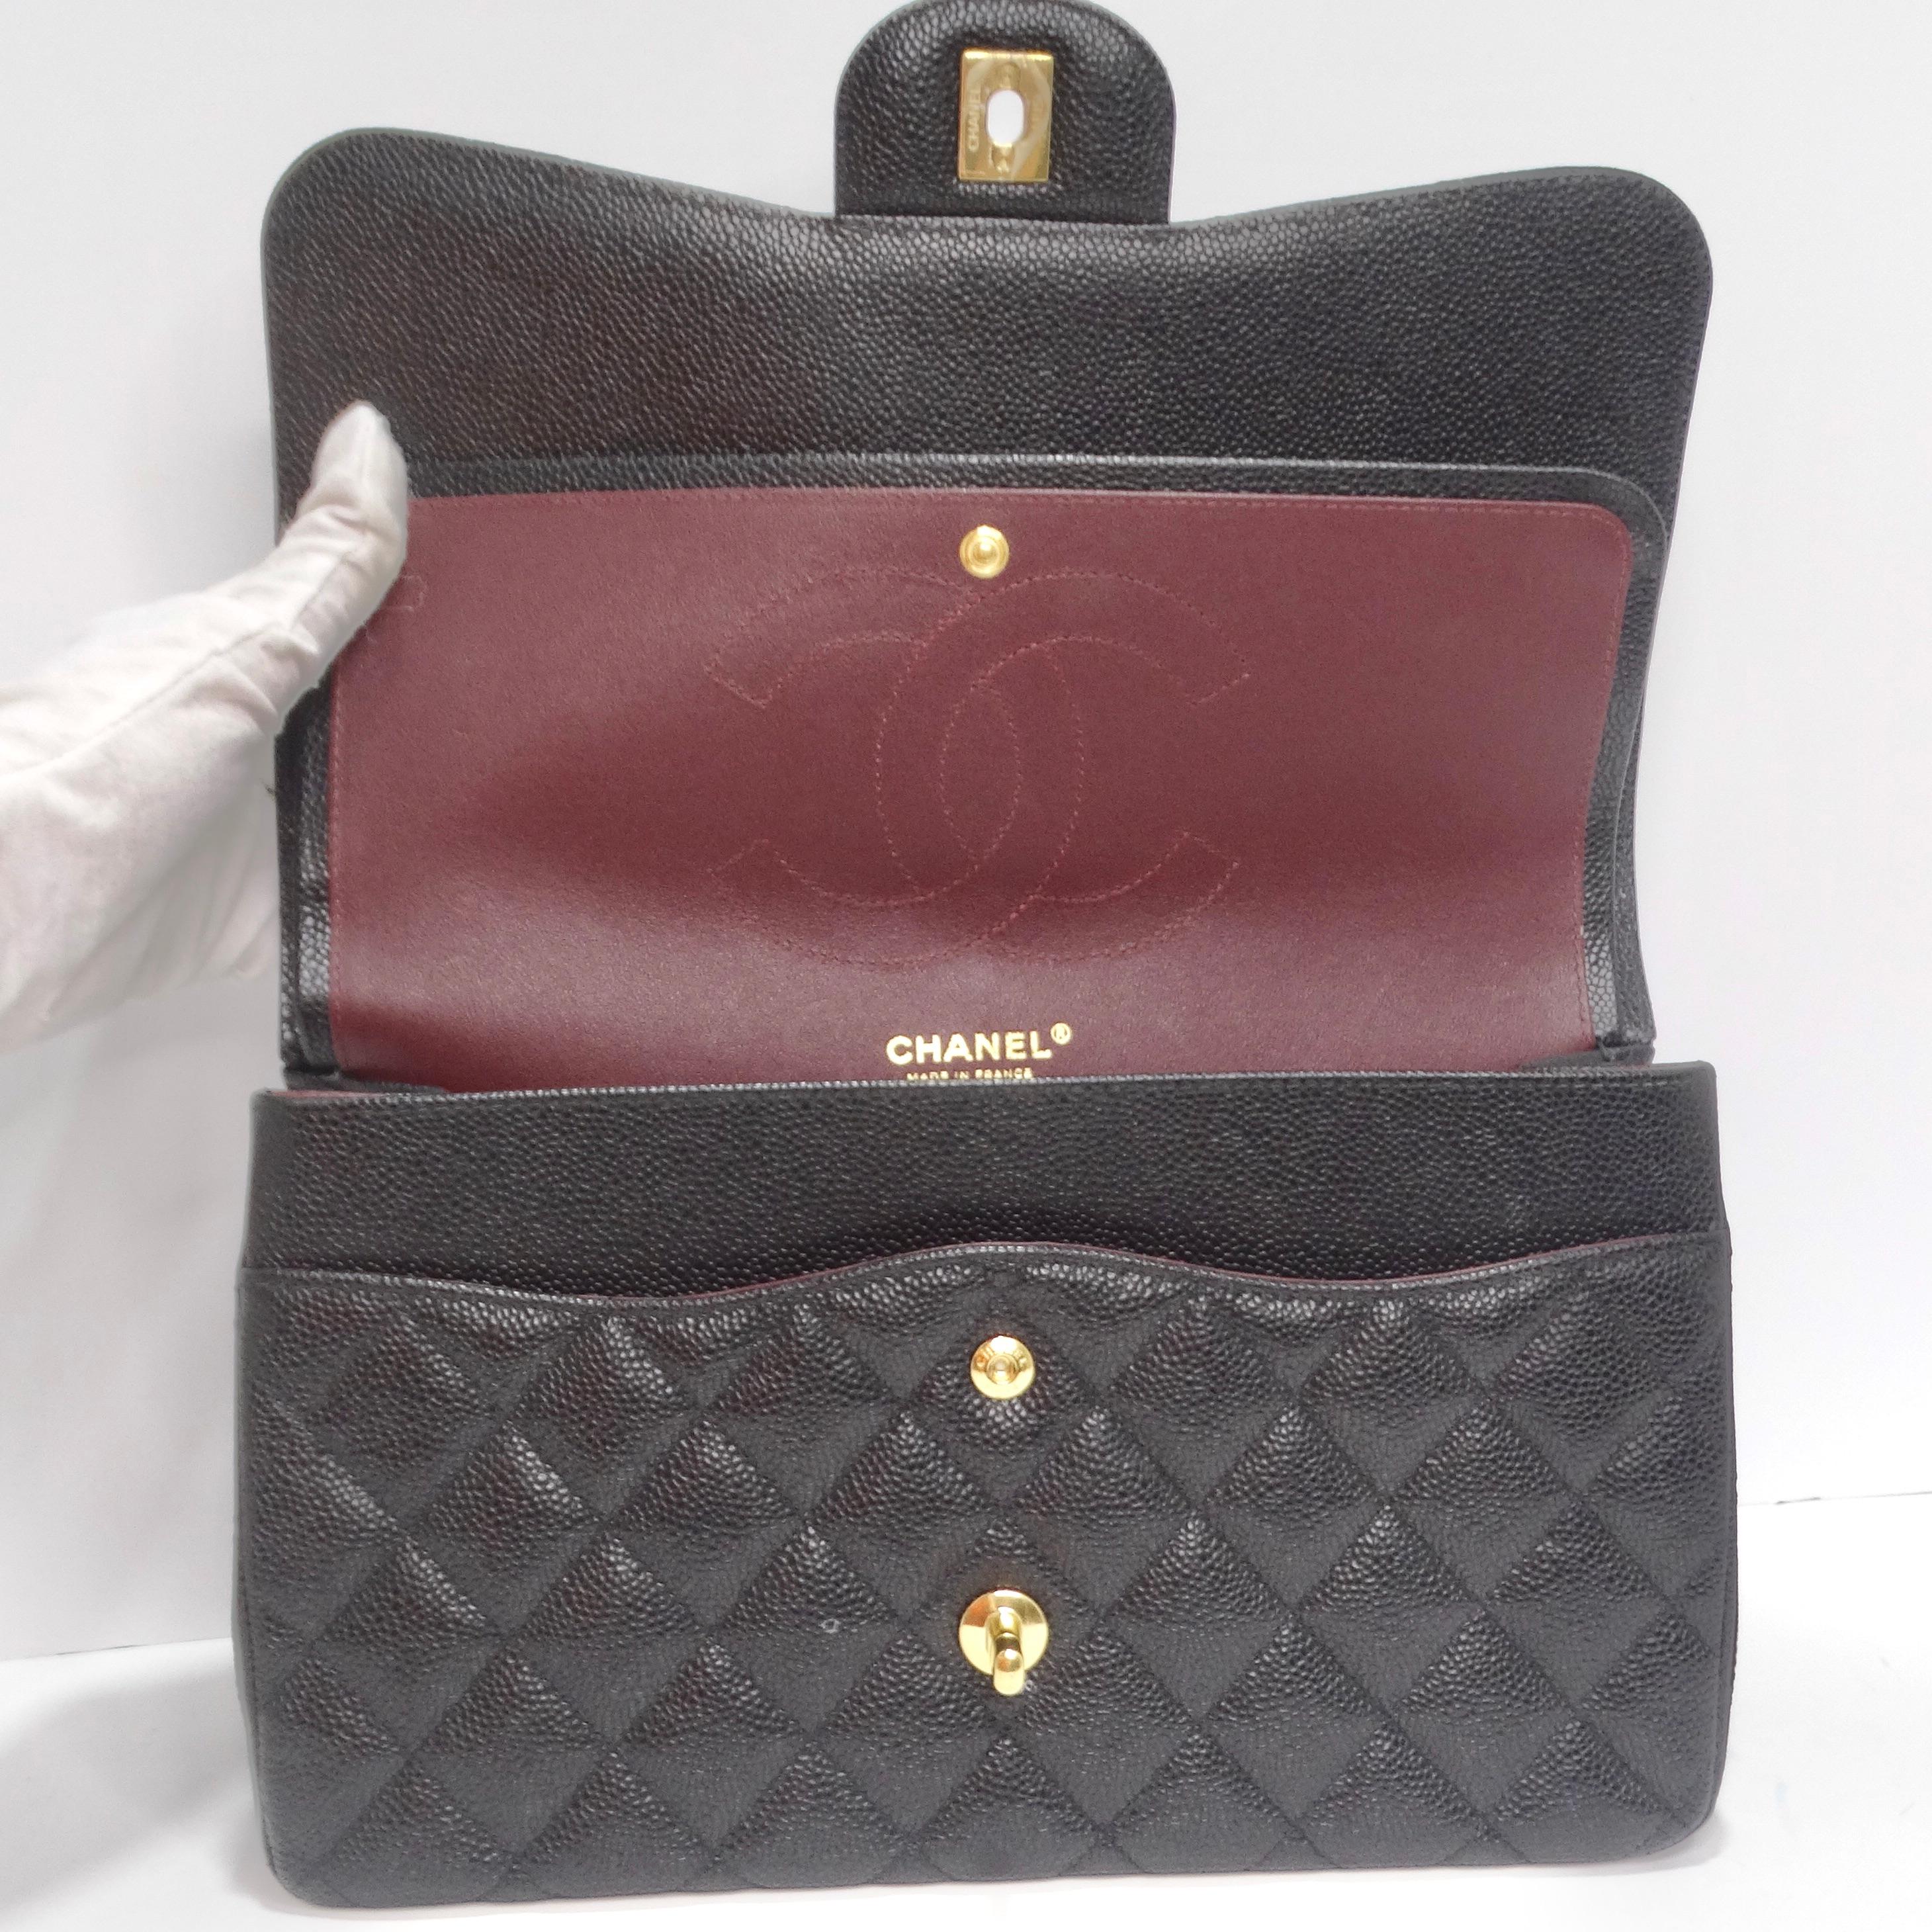 Chanel Large Classic Quilted Caviar Handbag Black/Burgundy 9